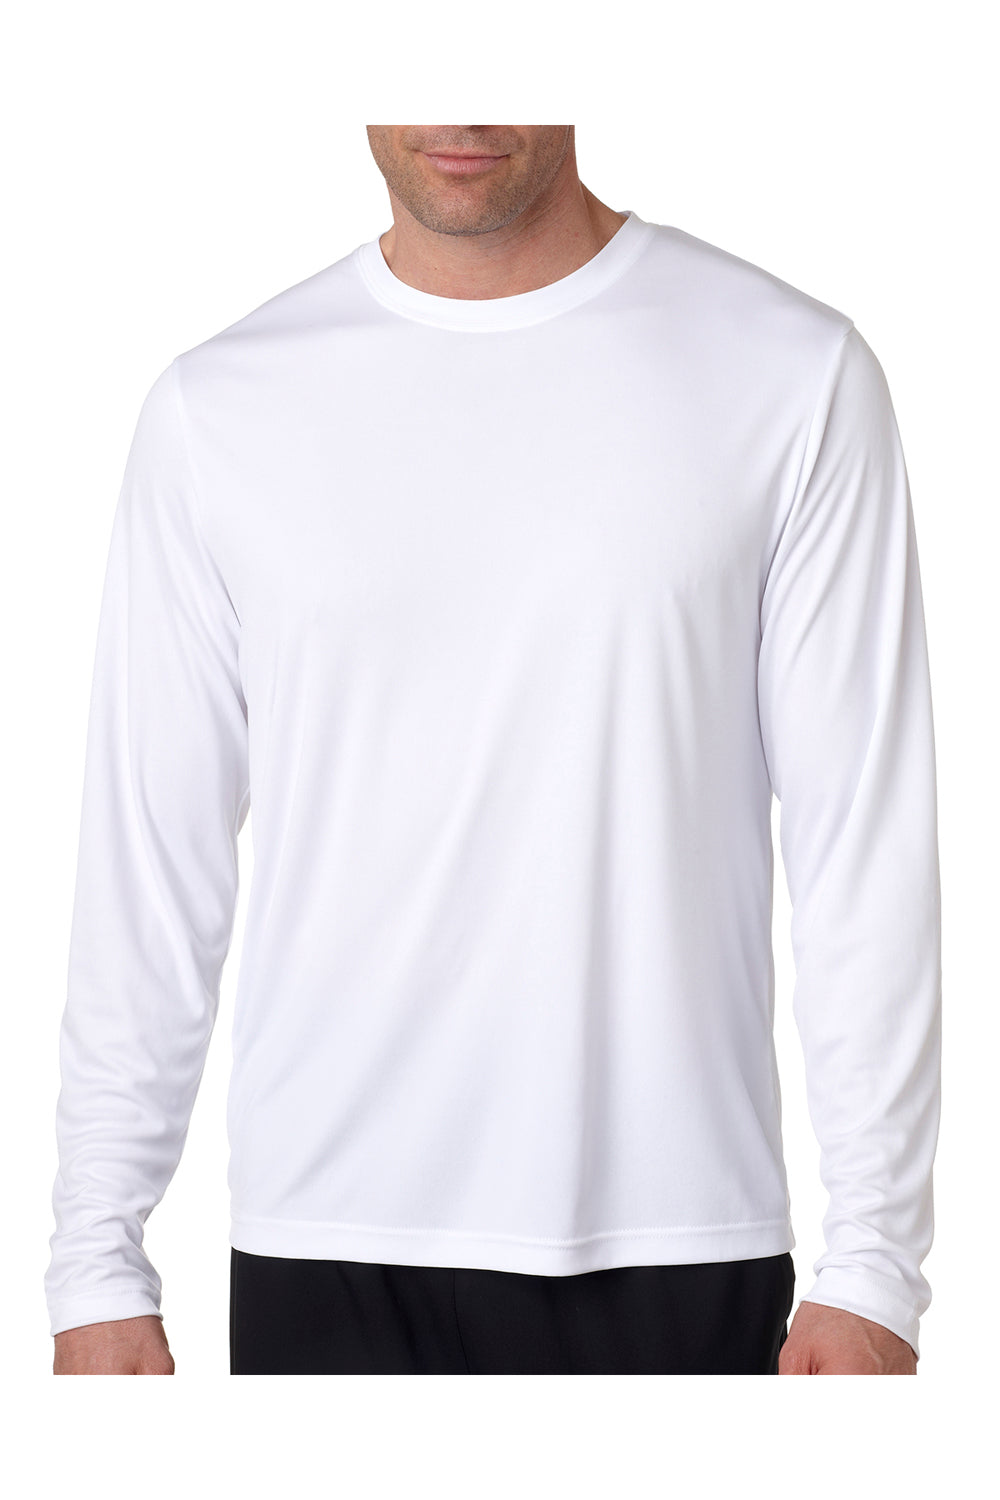 Hanes 482L Mens Cool DRI FreshIQ Moisture Wicking Long Sleeve Crewneck T-Shirt White Front